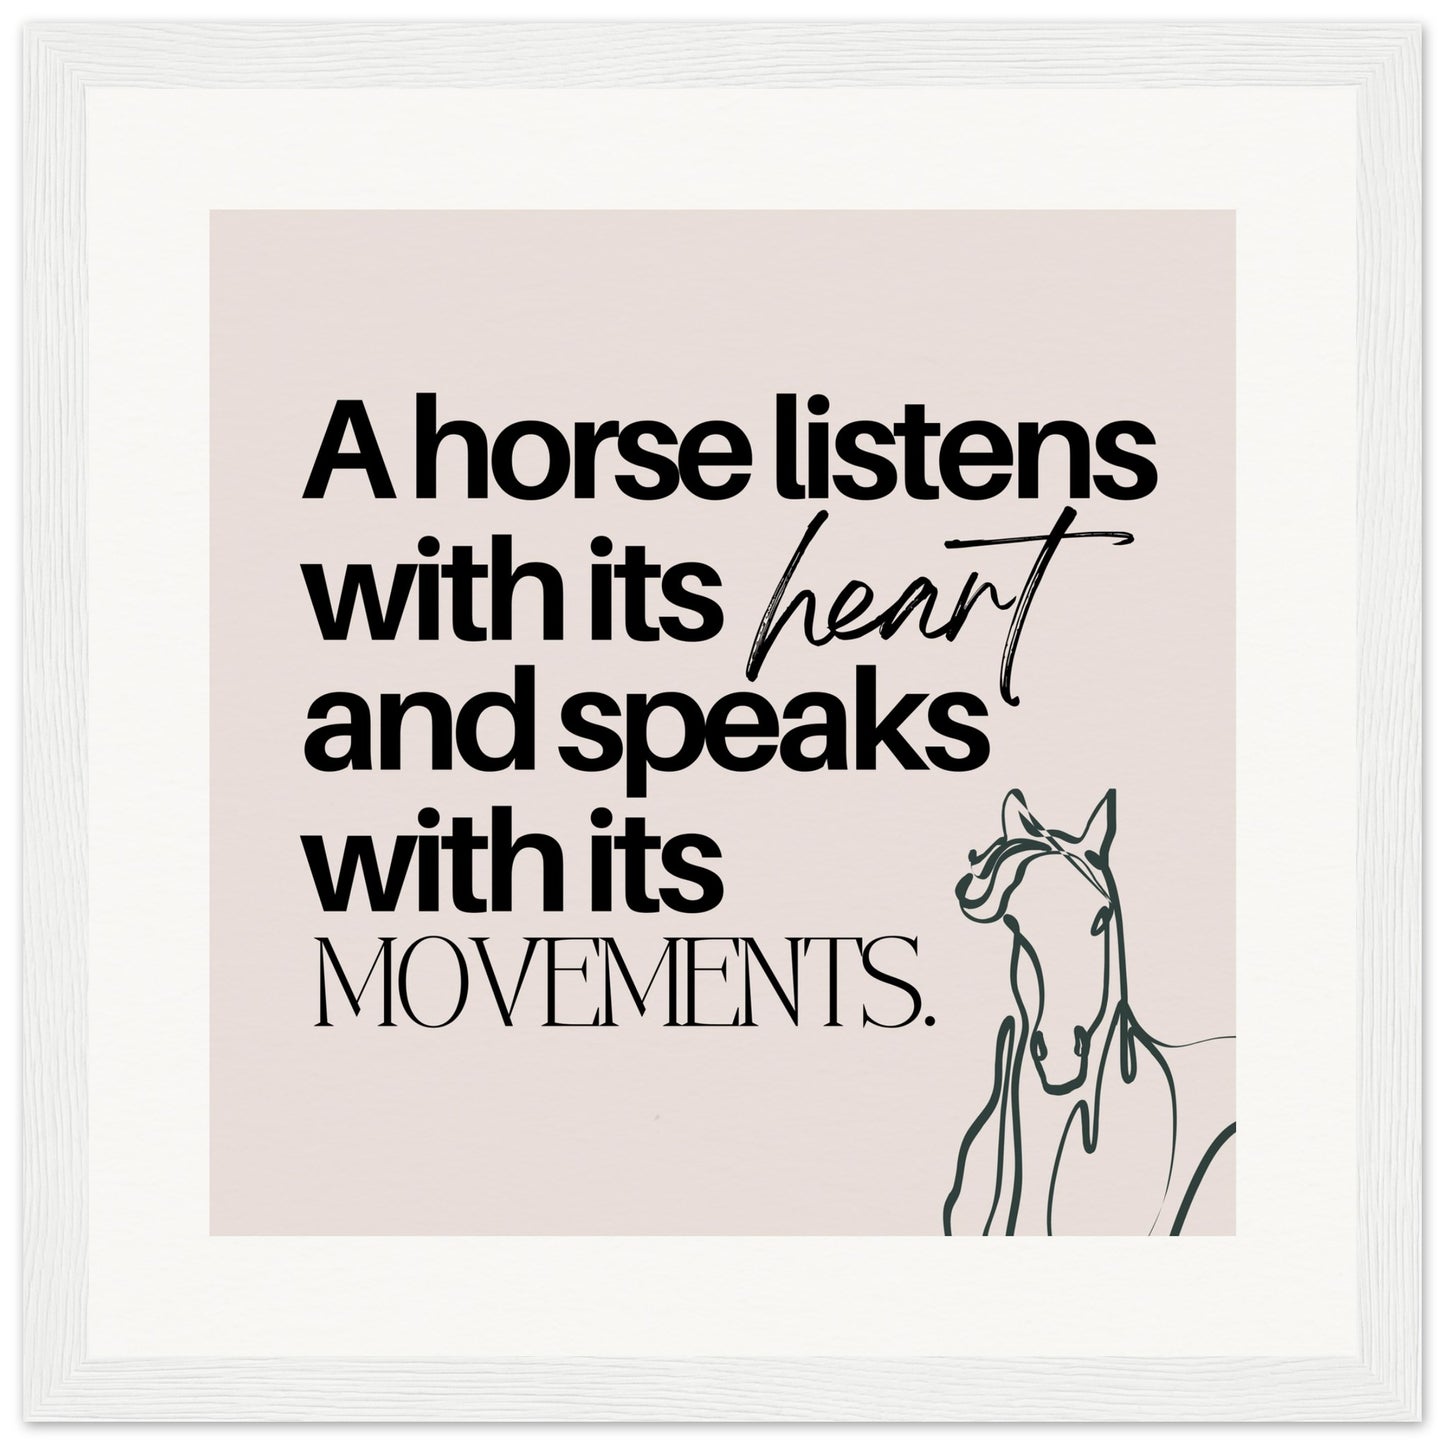 A horse listens: Wooden Framed Poster